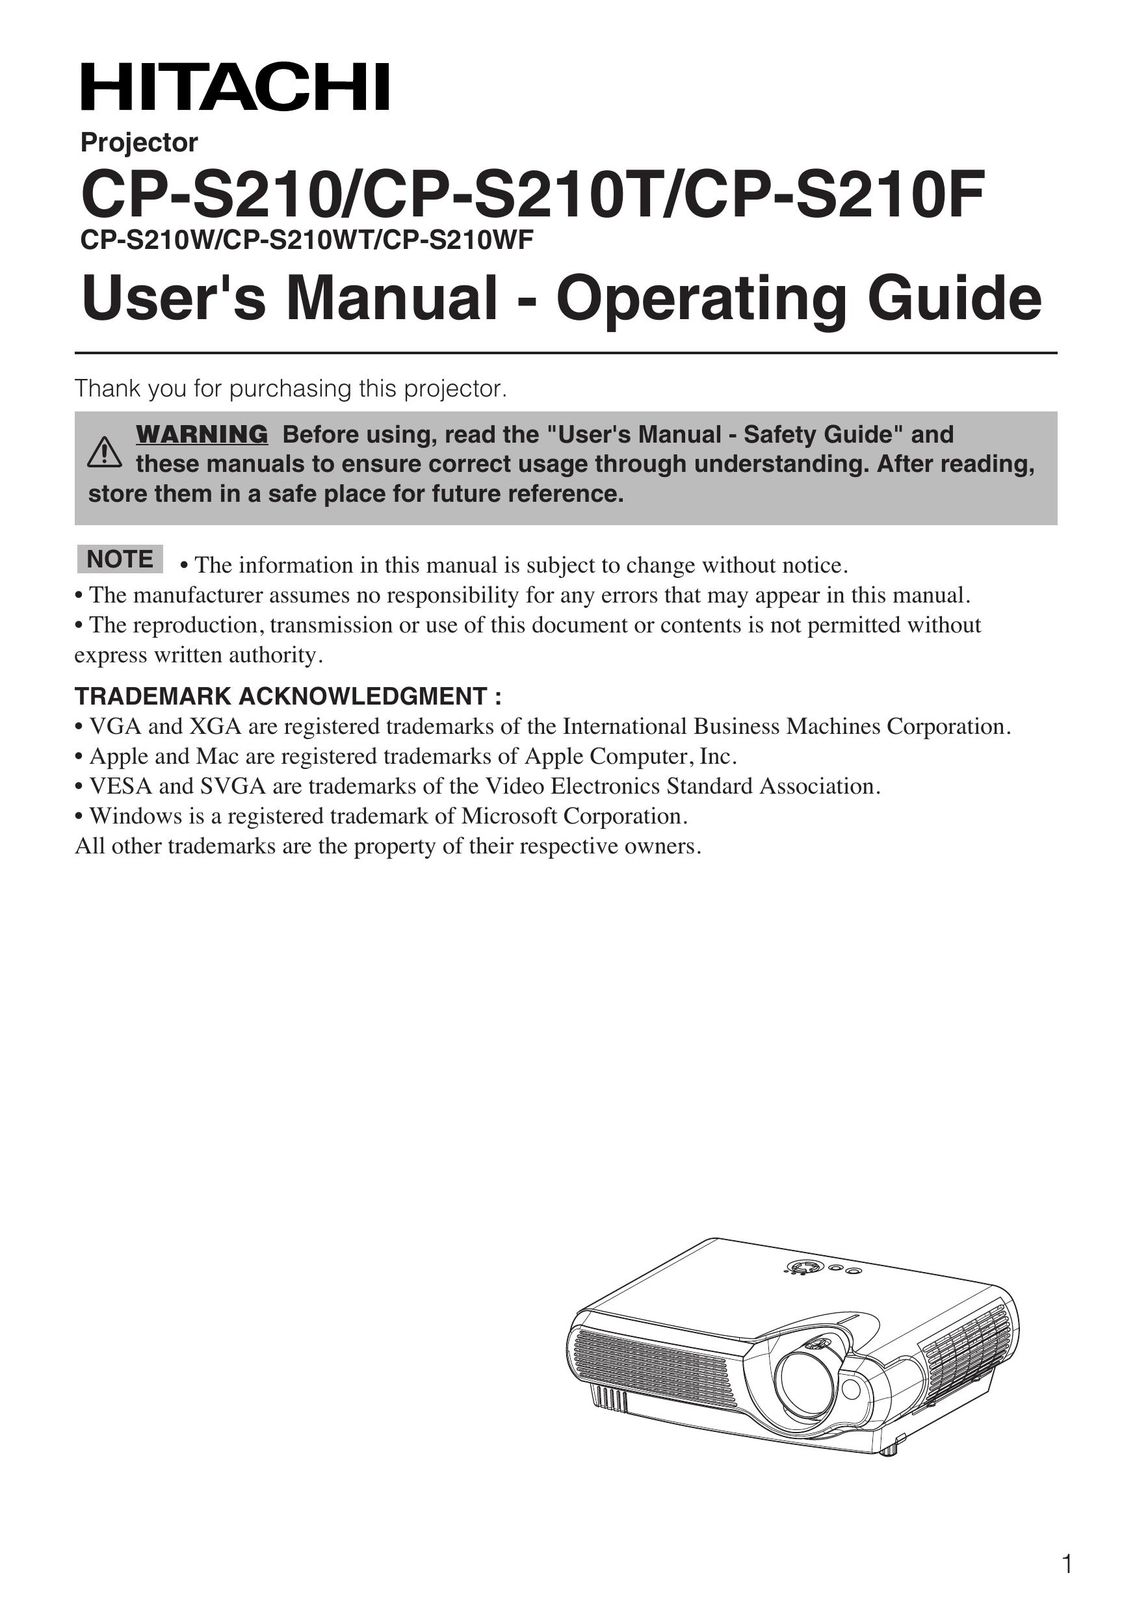 Hitachi CP-S210T Projector User Manual